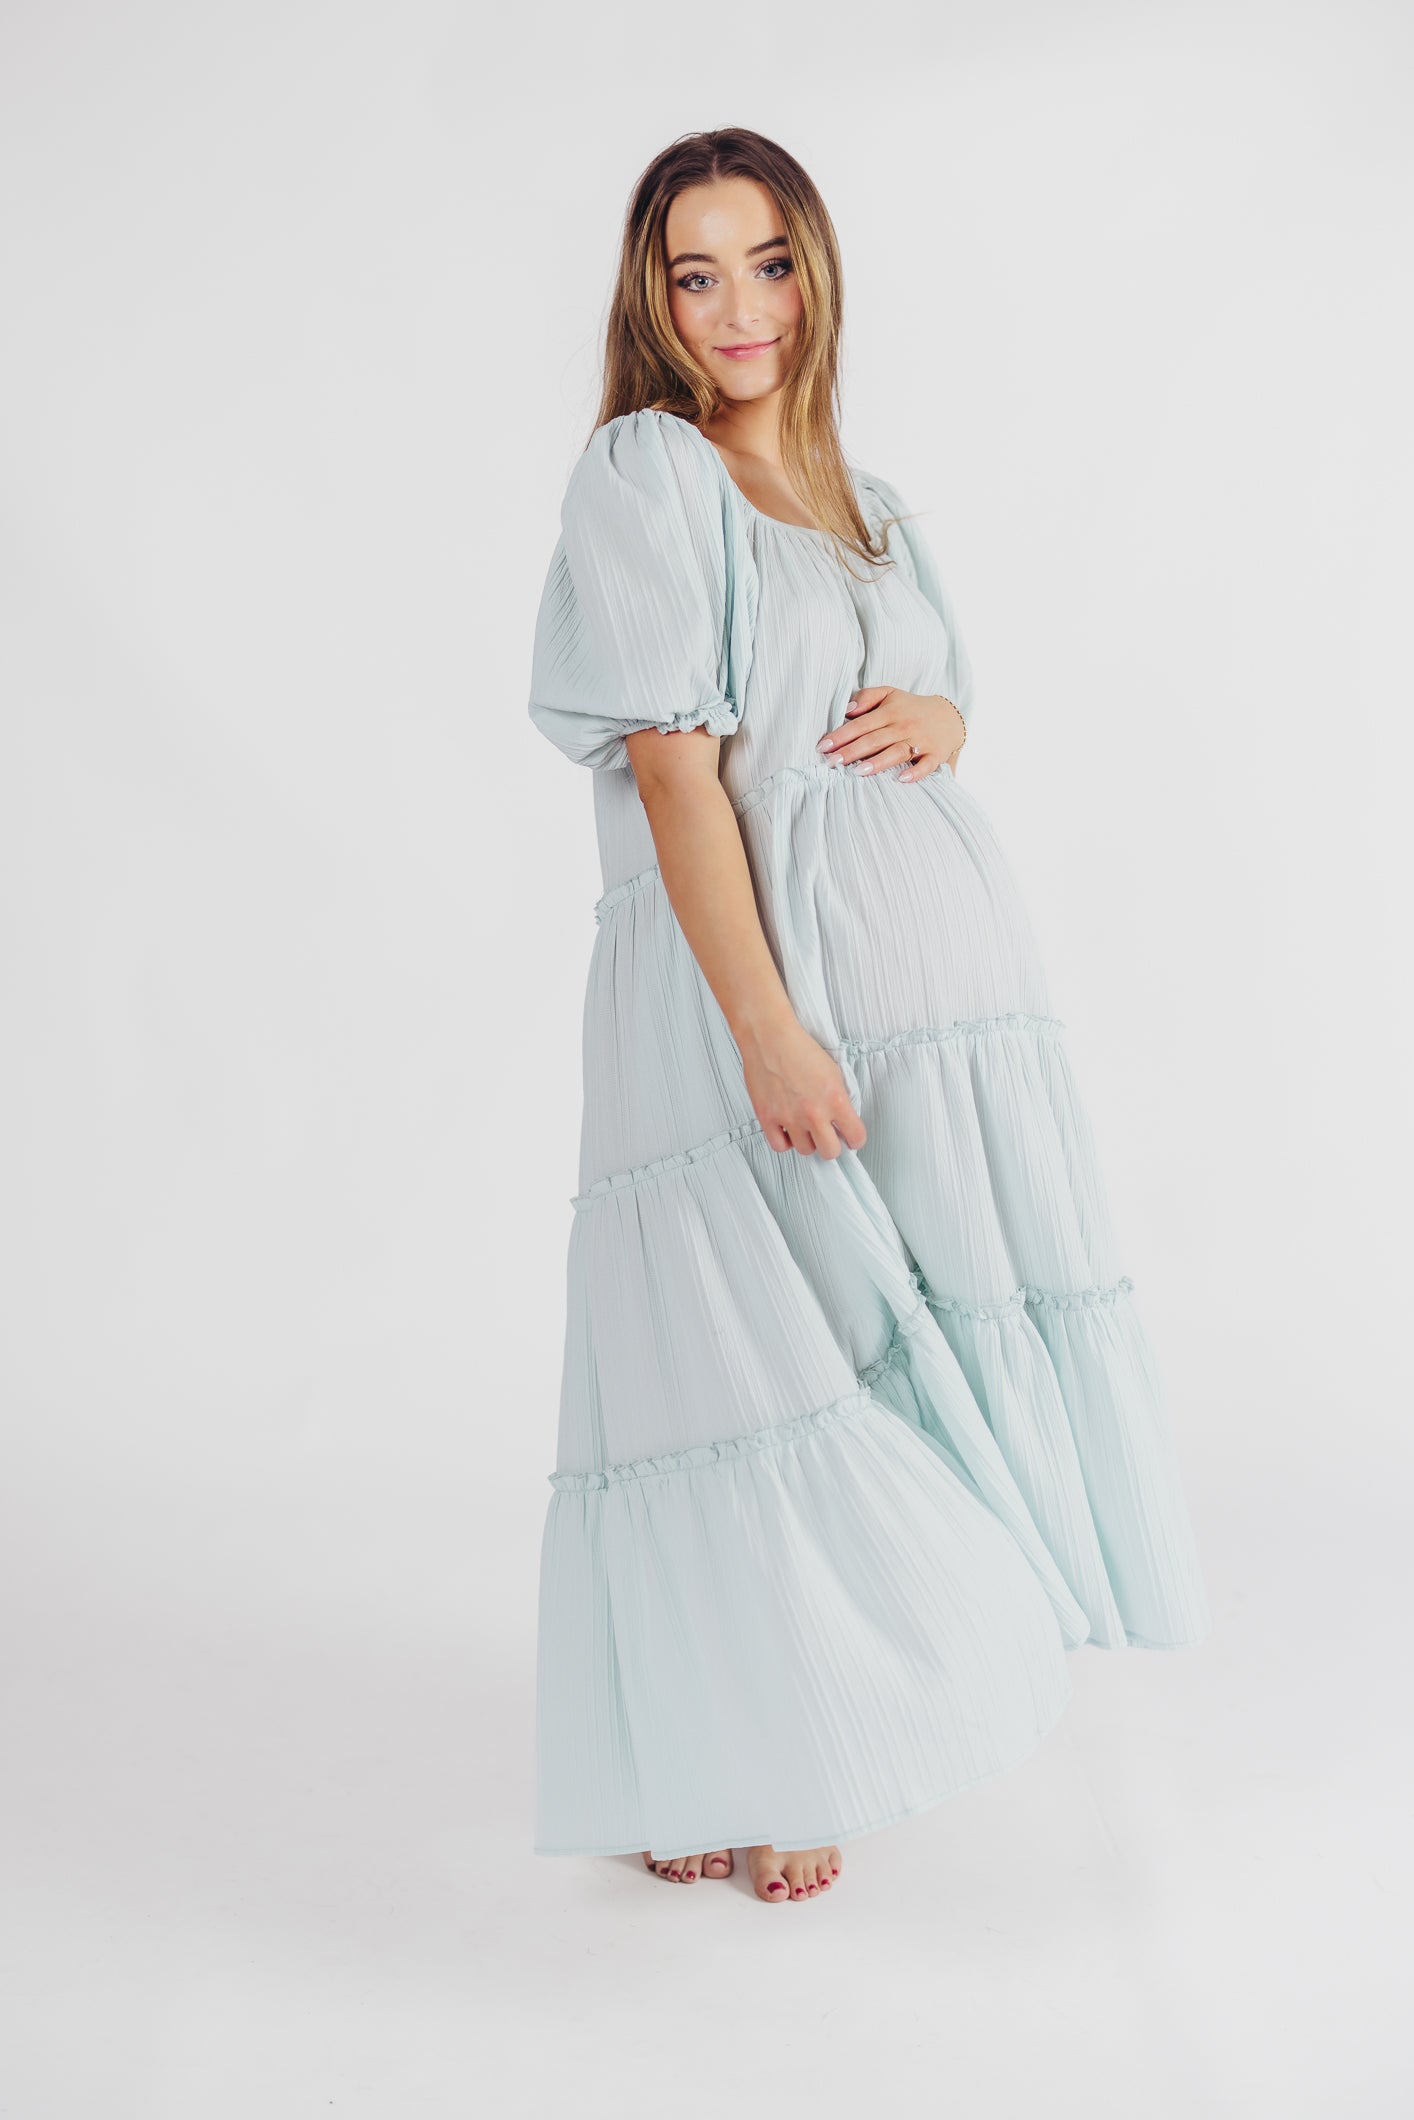 Eva Maxi Tiered Dress in Sky Blue - Bump Friendly & Inclusive Sizing (S-3XL)